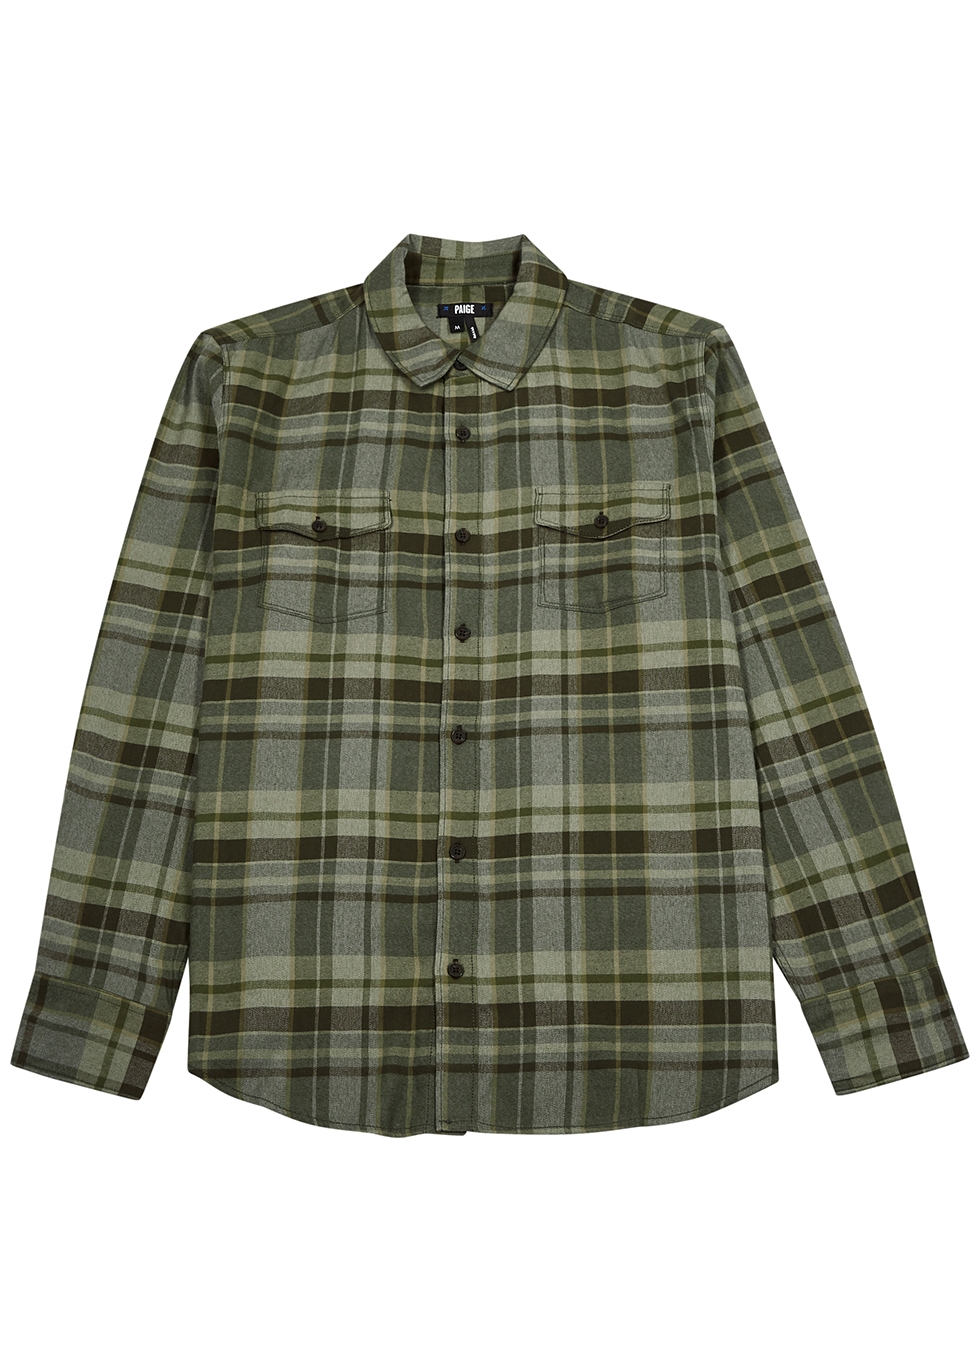 Everett green checked flannel shirt